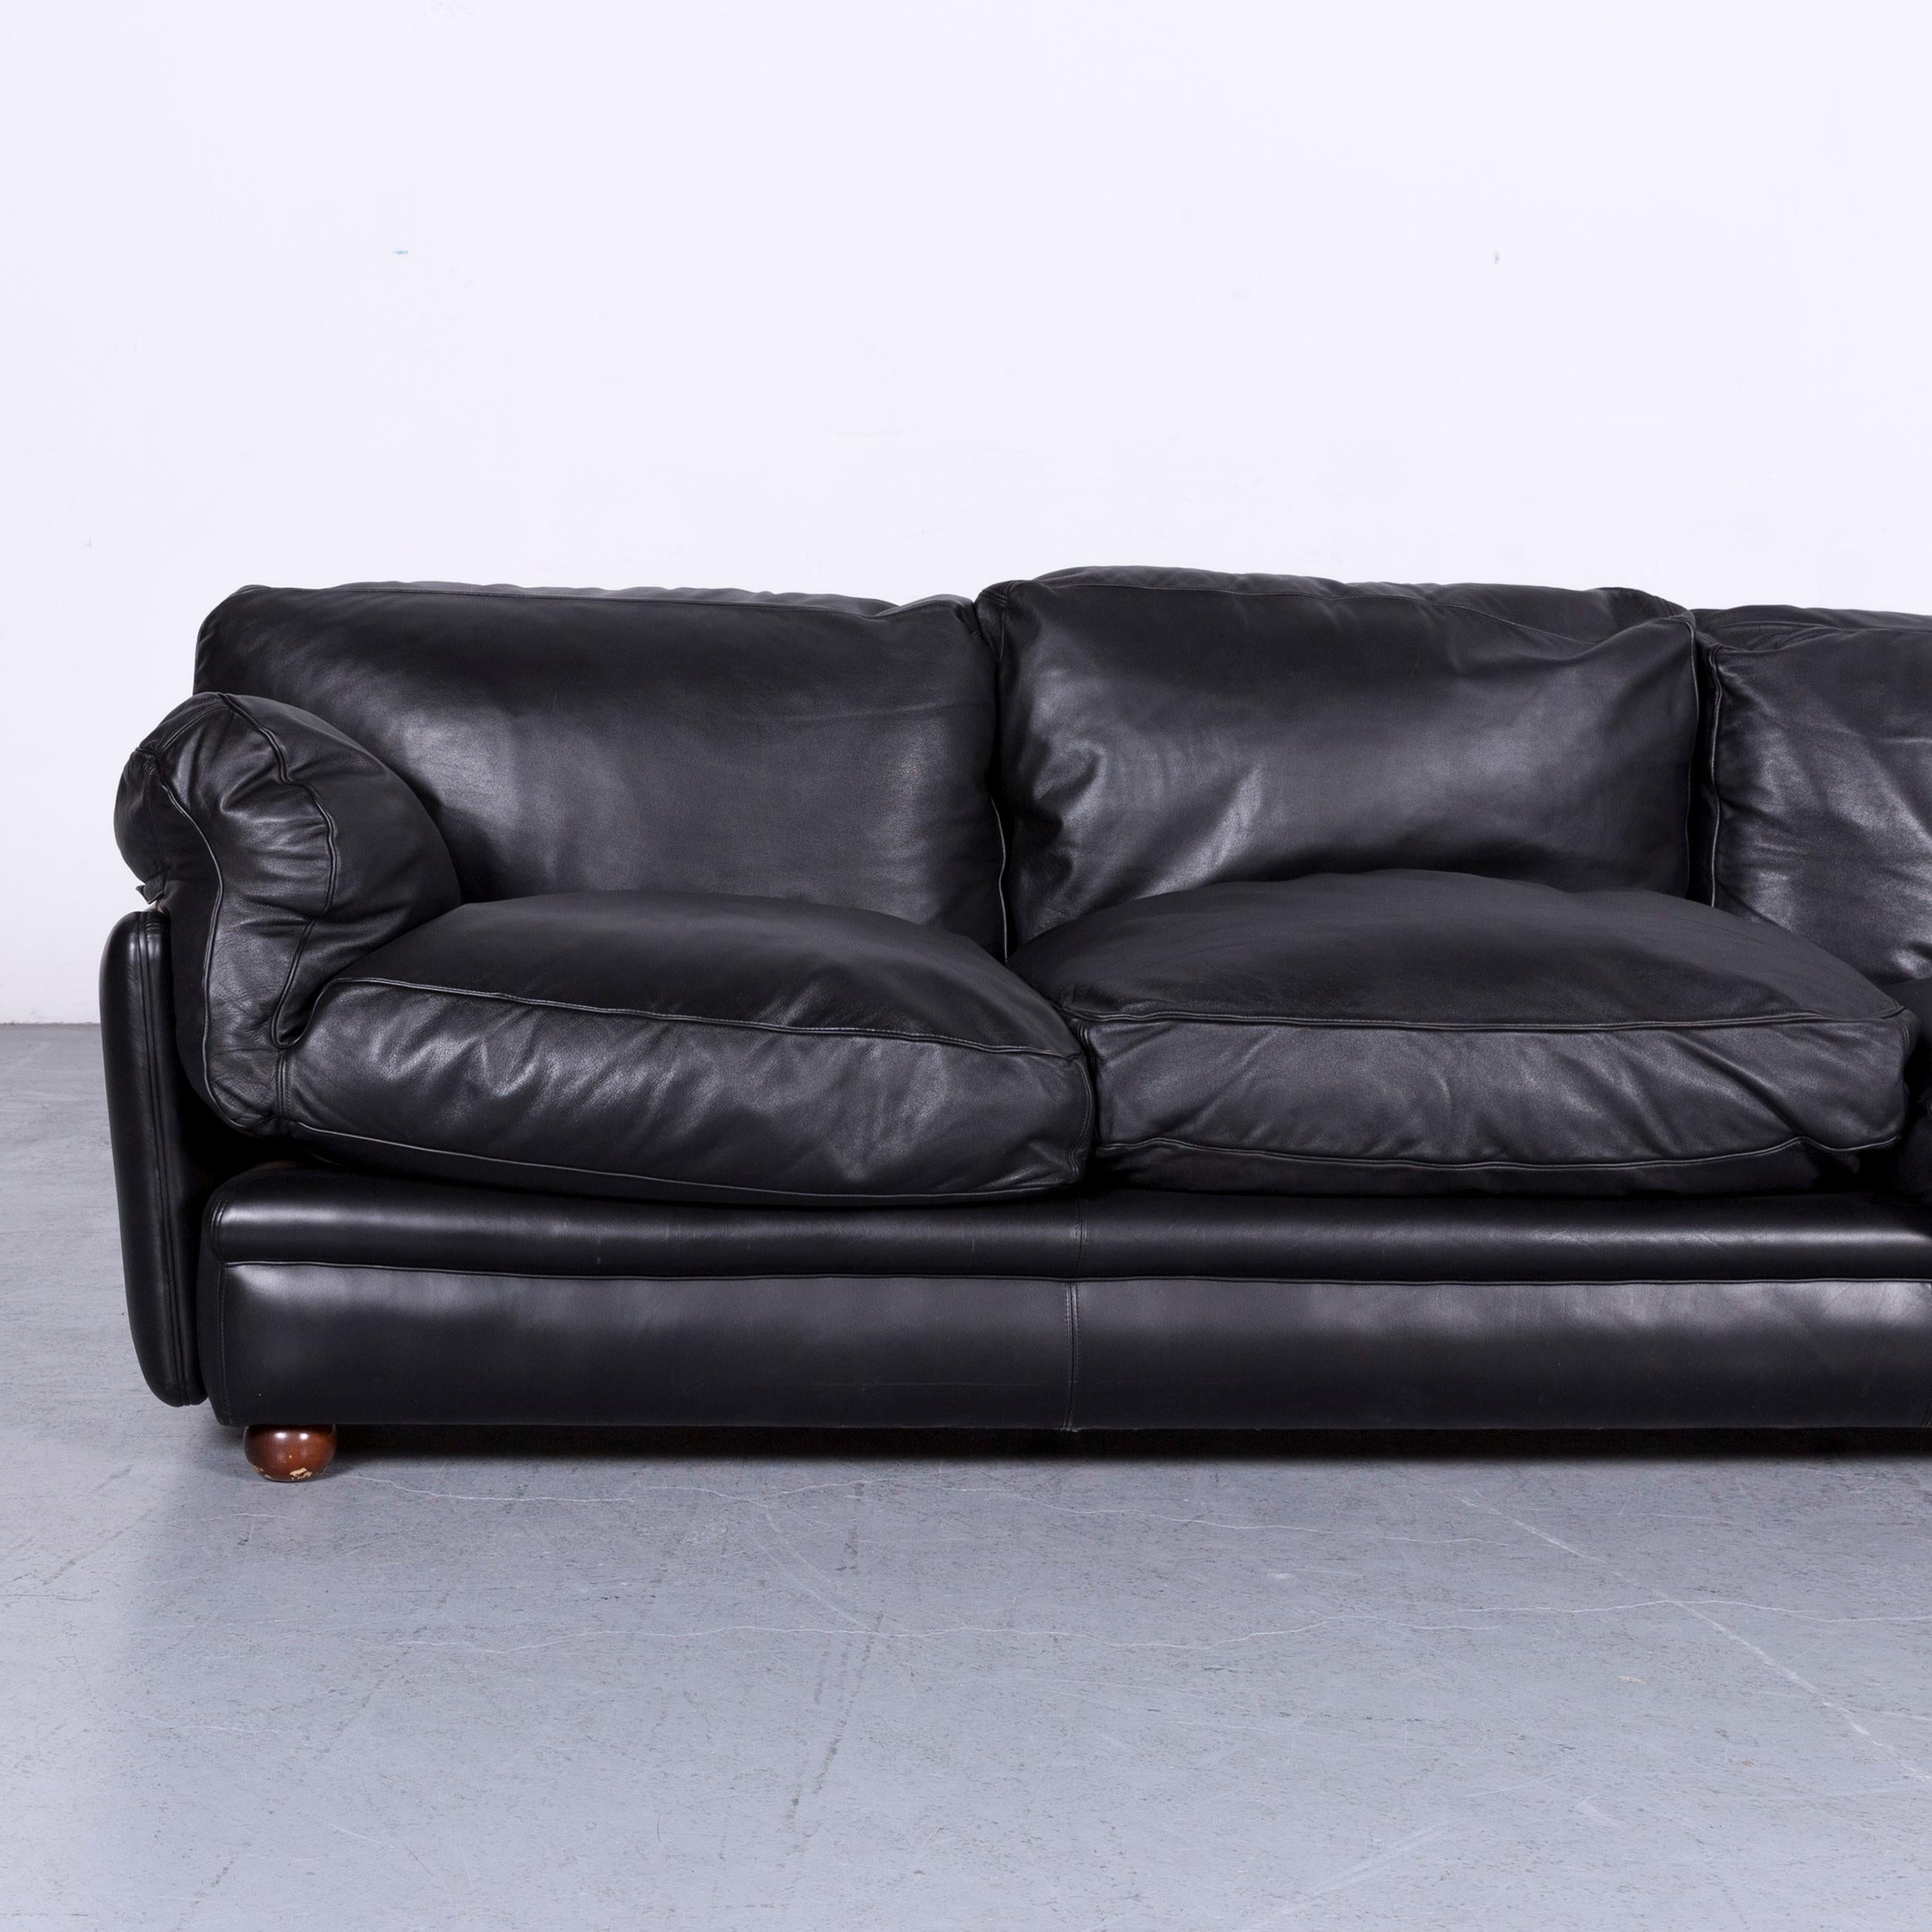 Italian Poltrona Frau Designer Leather Sofa in Black Three-Seat Couch For Sale